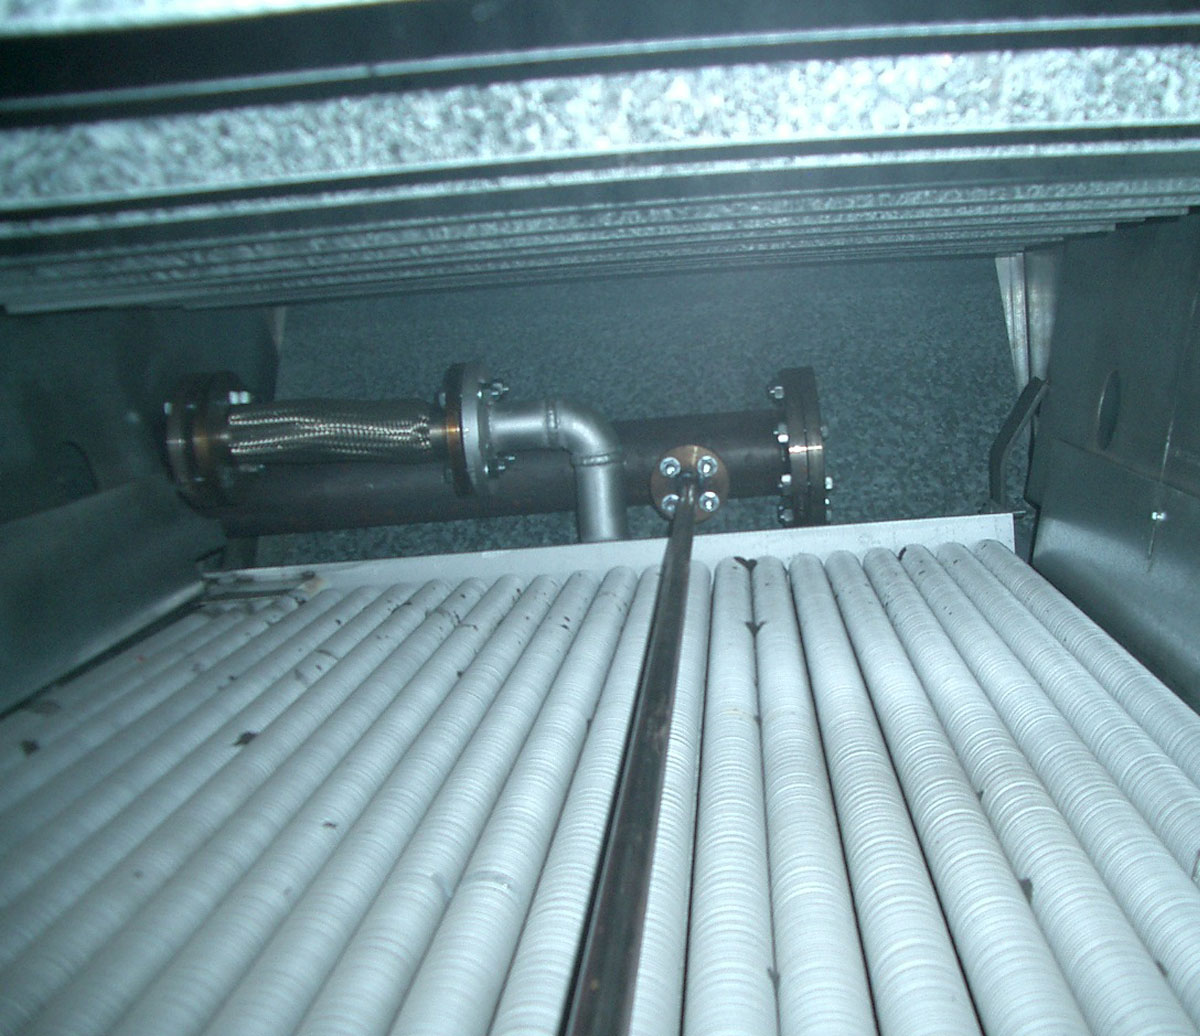 Fabricacion radiador irpen 3 - BATTERIE À TUBE FINI EN ACIER INOXYDABLE 1.4404 (316L)